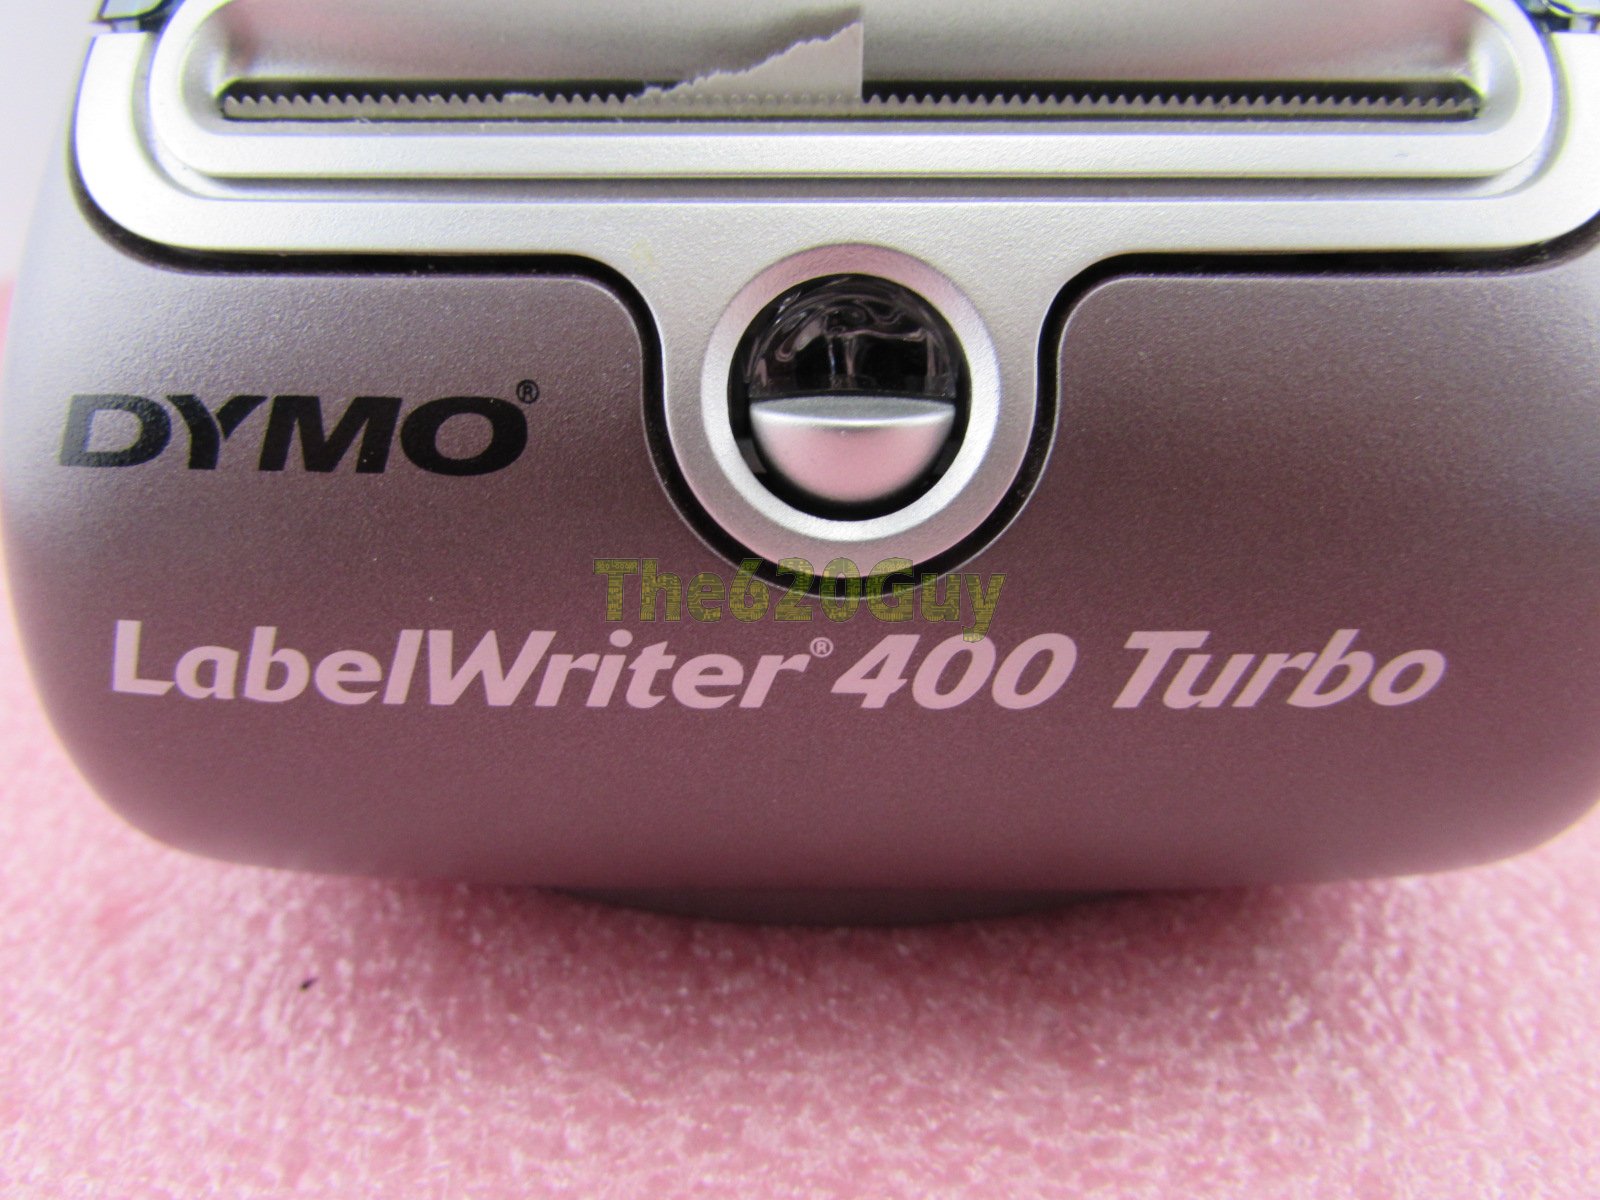 dymo labelwriter 400 windows 10